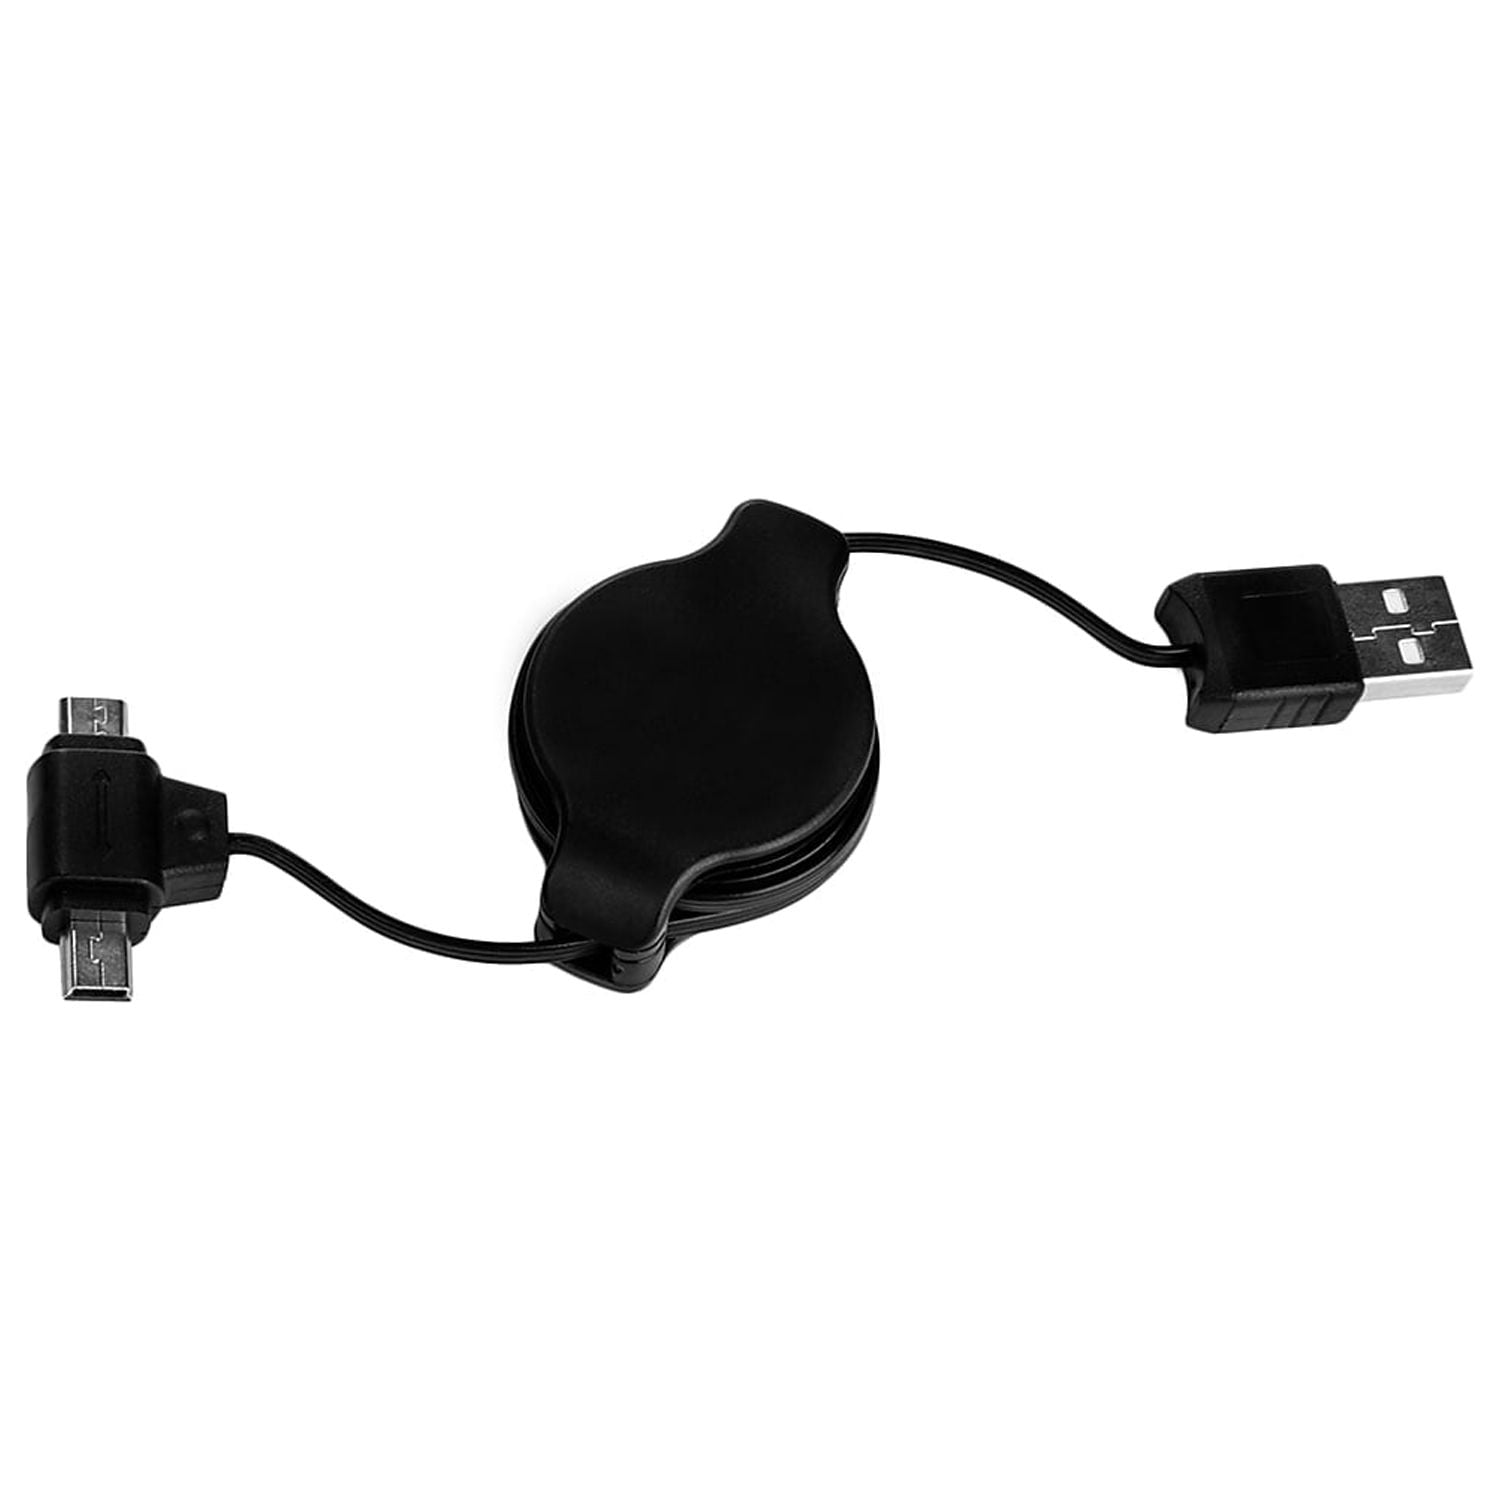 Cable USB C a Micro USB, cargador tipo C a micro USB compatible con Samsung  Galaxy S4/S7, MacBook Pro Air, controlador Xbox-One PS4, LG, Moto